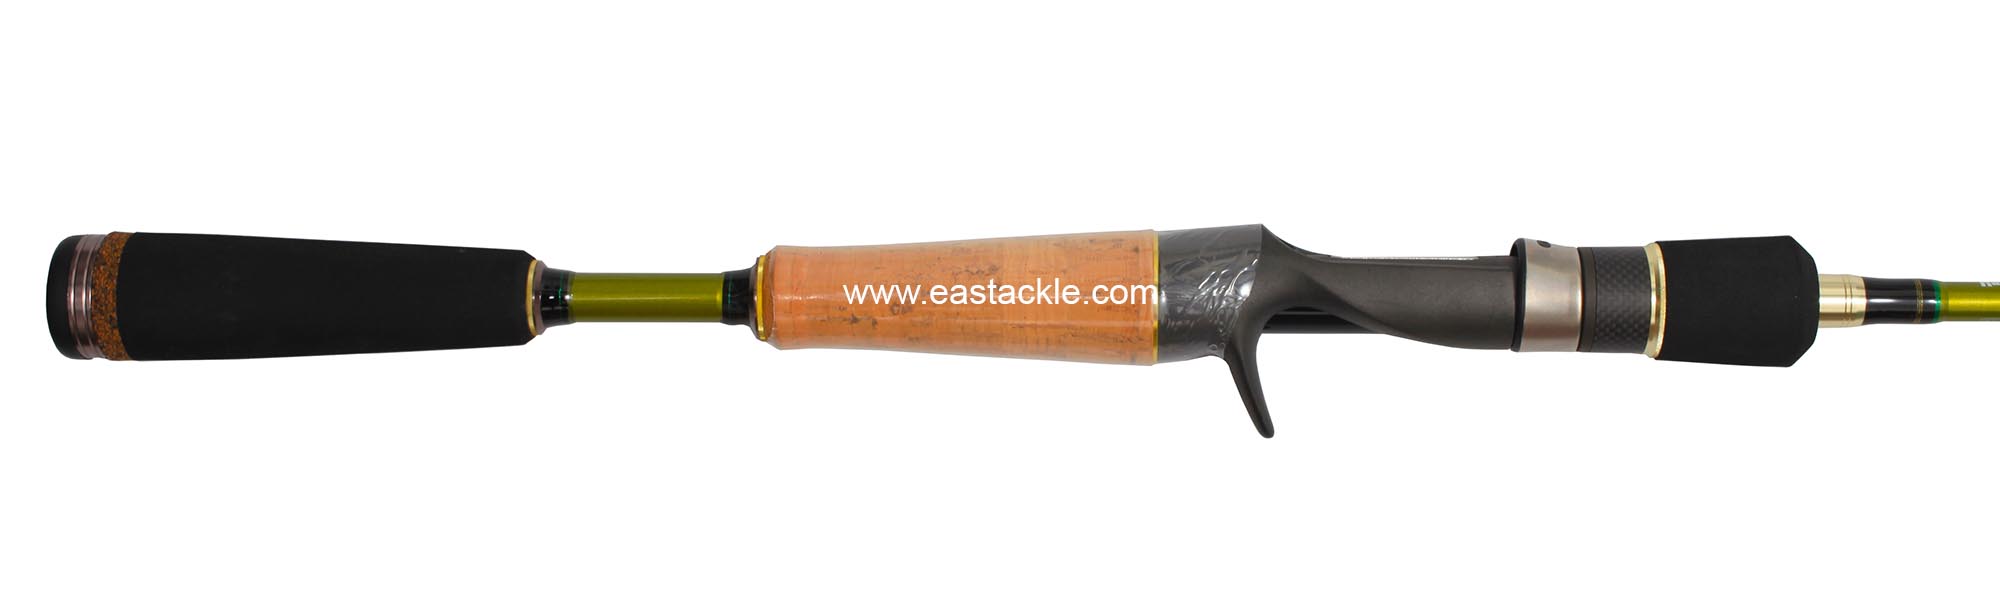 Rapala - Koivu - KVC652ML - Bait Casting Rod - Handle Section (Side View) | Eastackle